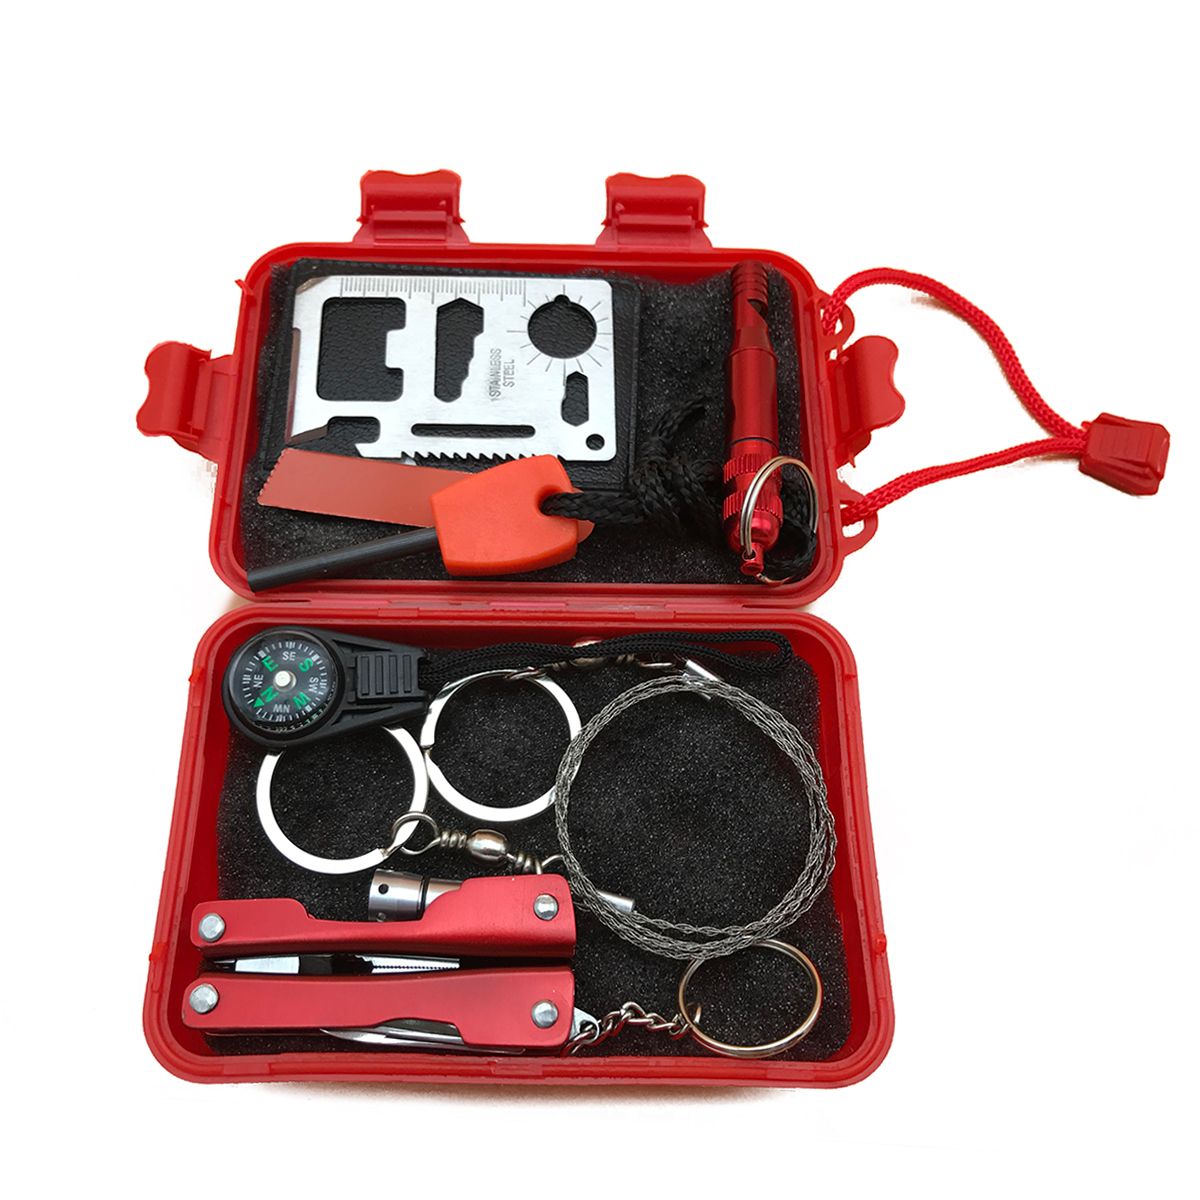 SOS-Emergency-Survival-Equipment-Kit-Outdoor-Survival-Gear-Tool-EDC-Camping-Hiking-Survival-Tools-Ki-1595942